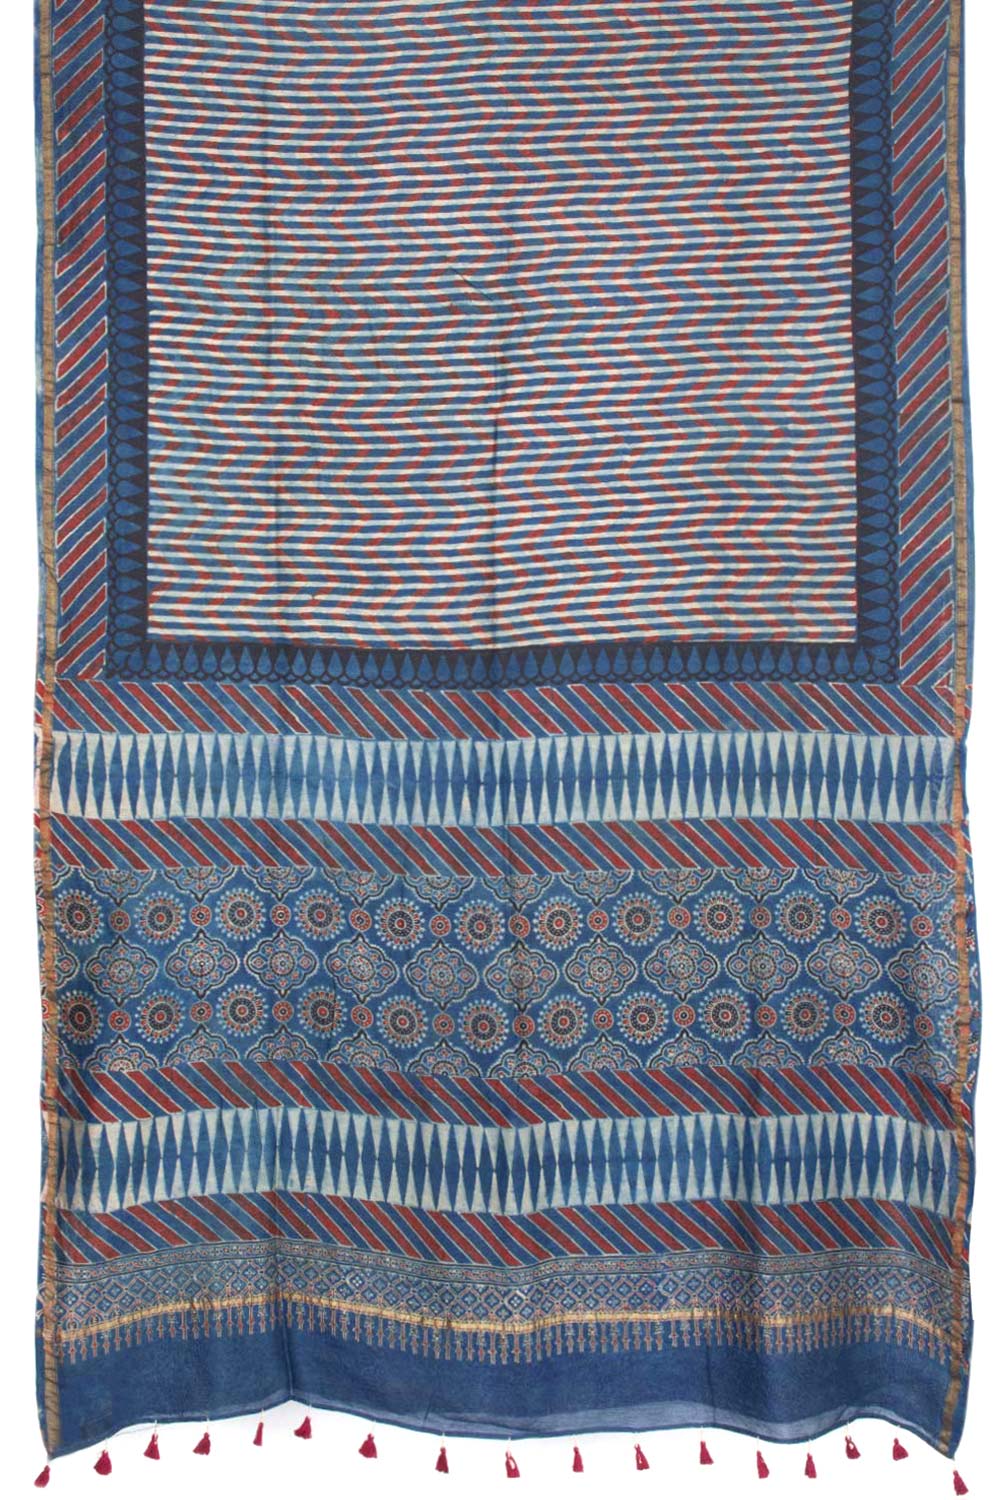 Indigo Blue Ajrakh Printed Silk Cotton Saree 10062733